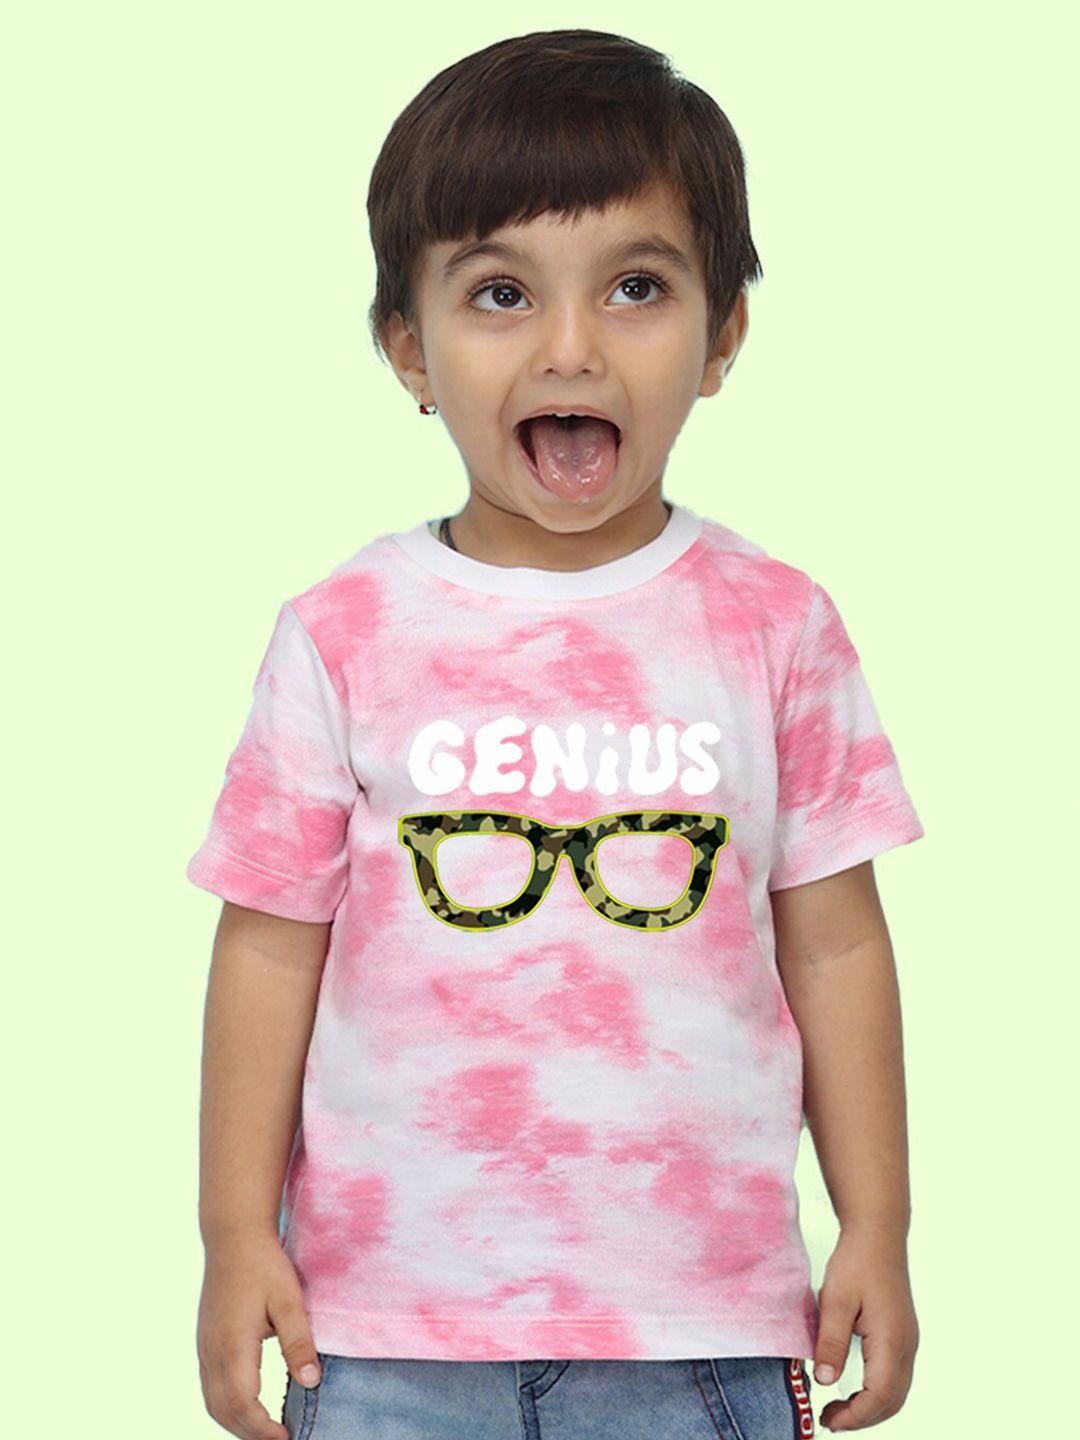 nusyl-kids-printed-t-shirt